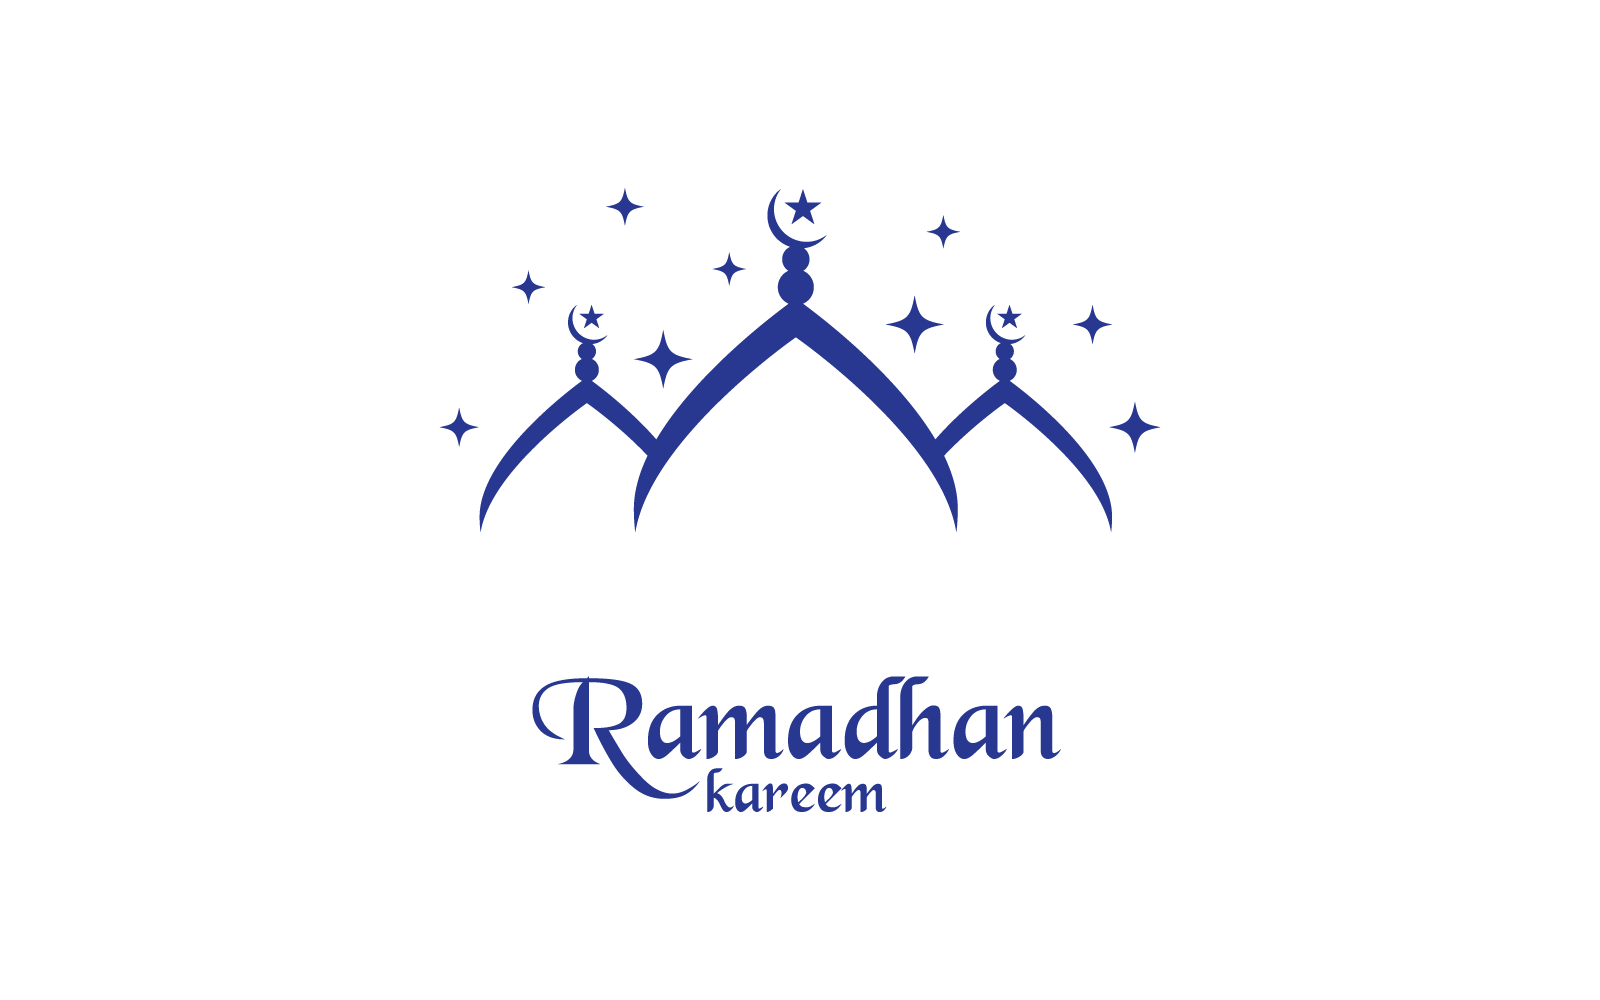 Islamic logo, Mosque,ramadhan kareem vector flat design